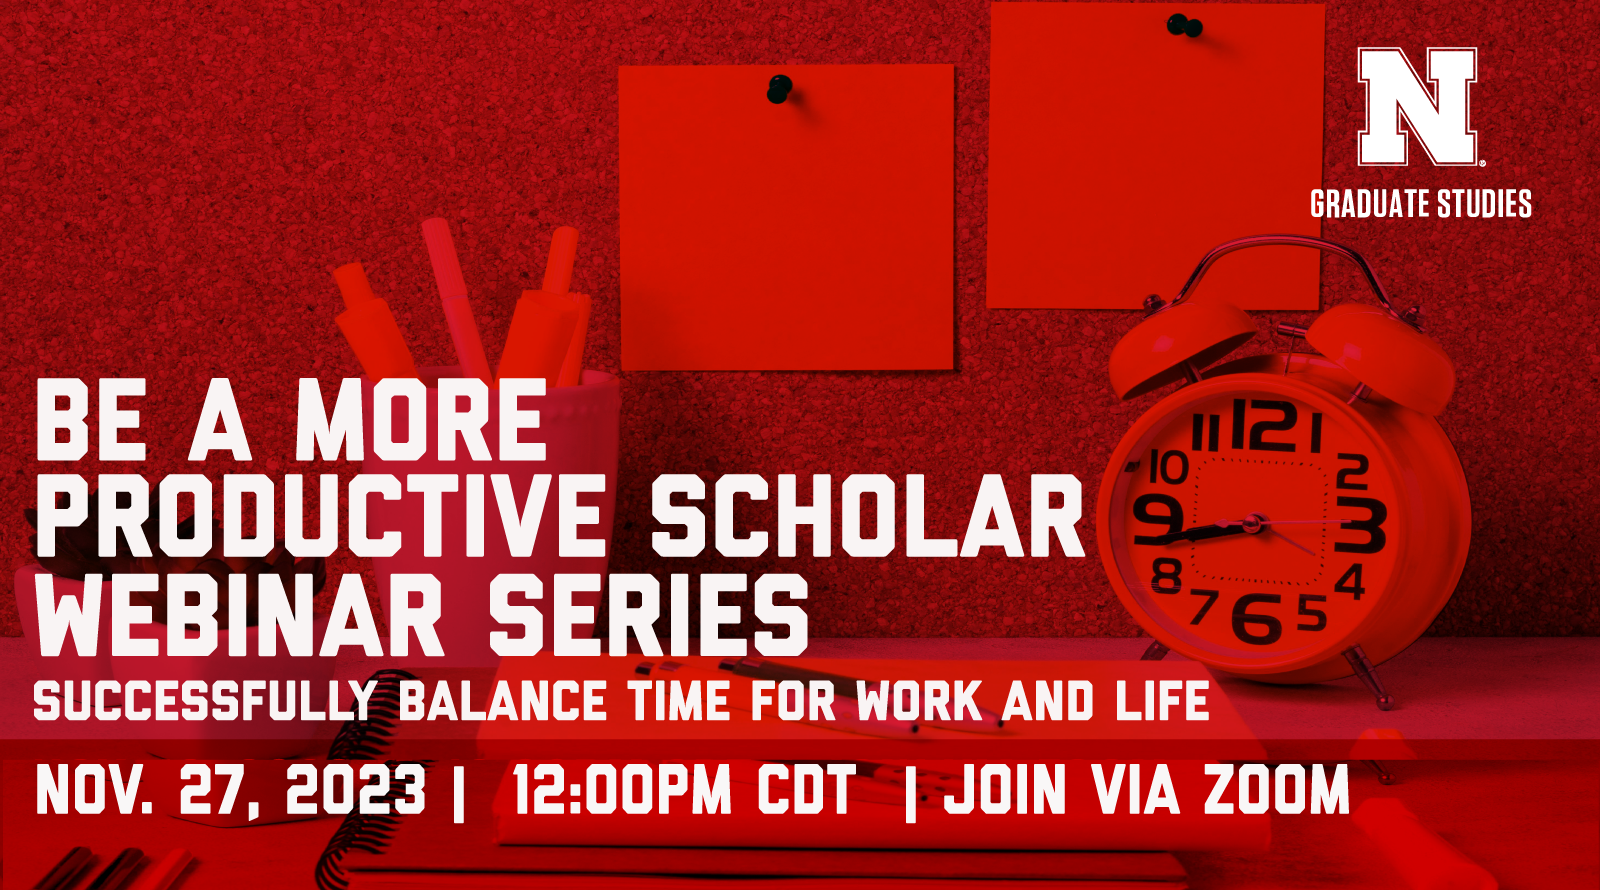 Be a More Productive Scholar Webinar Series. Nov 27, 2023 12:00PM. Join Via Zoom 